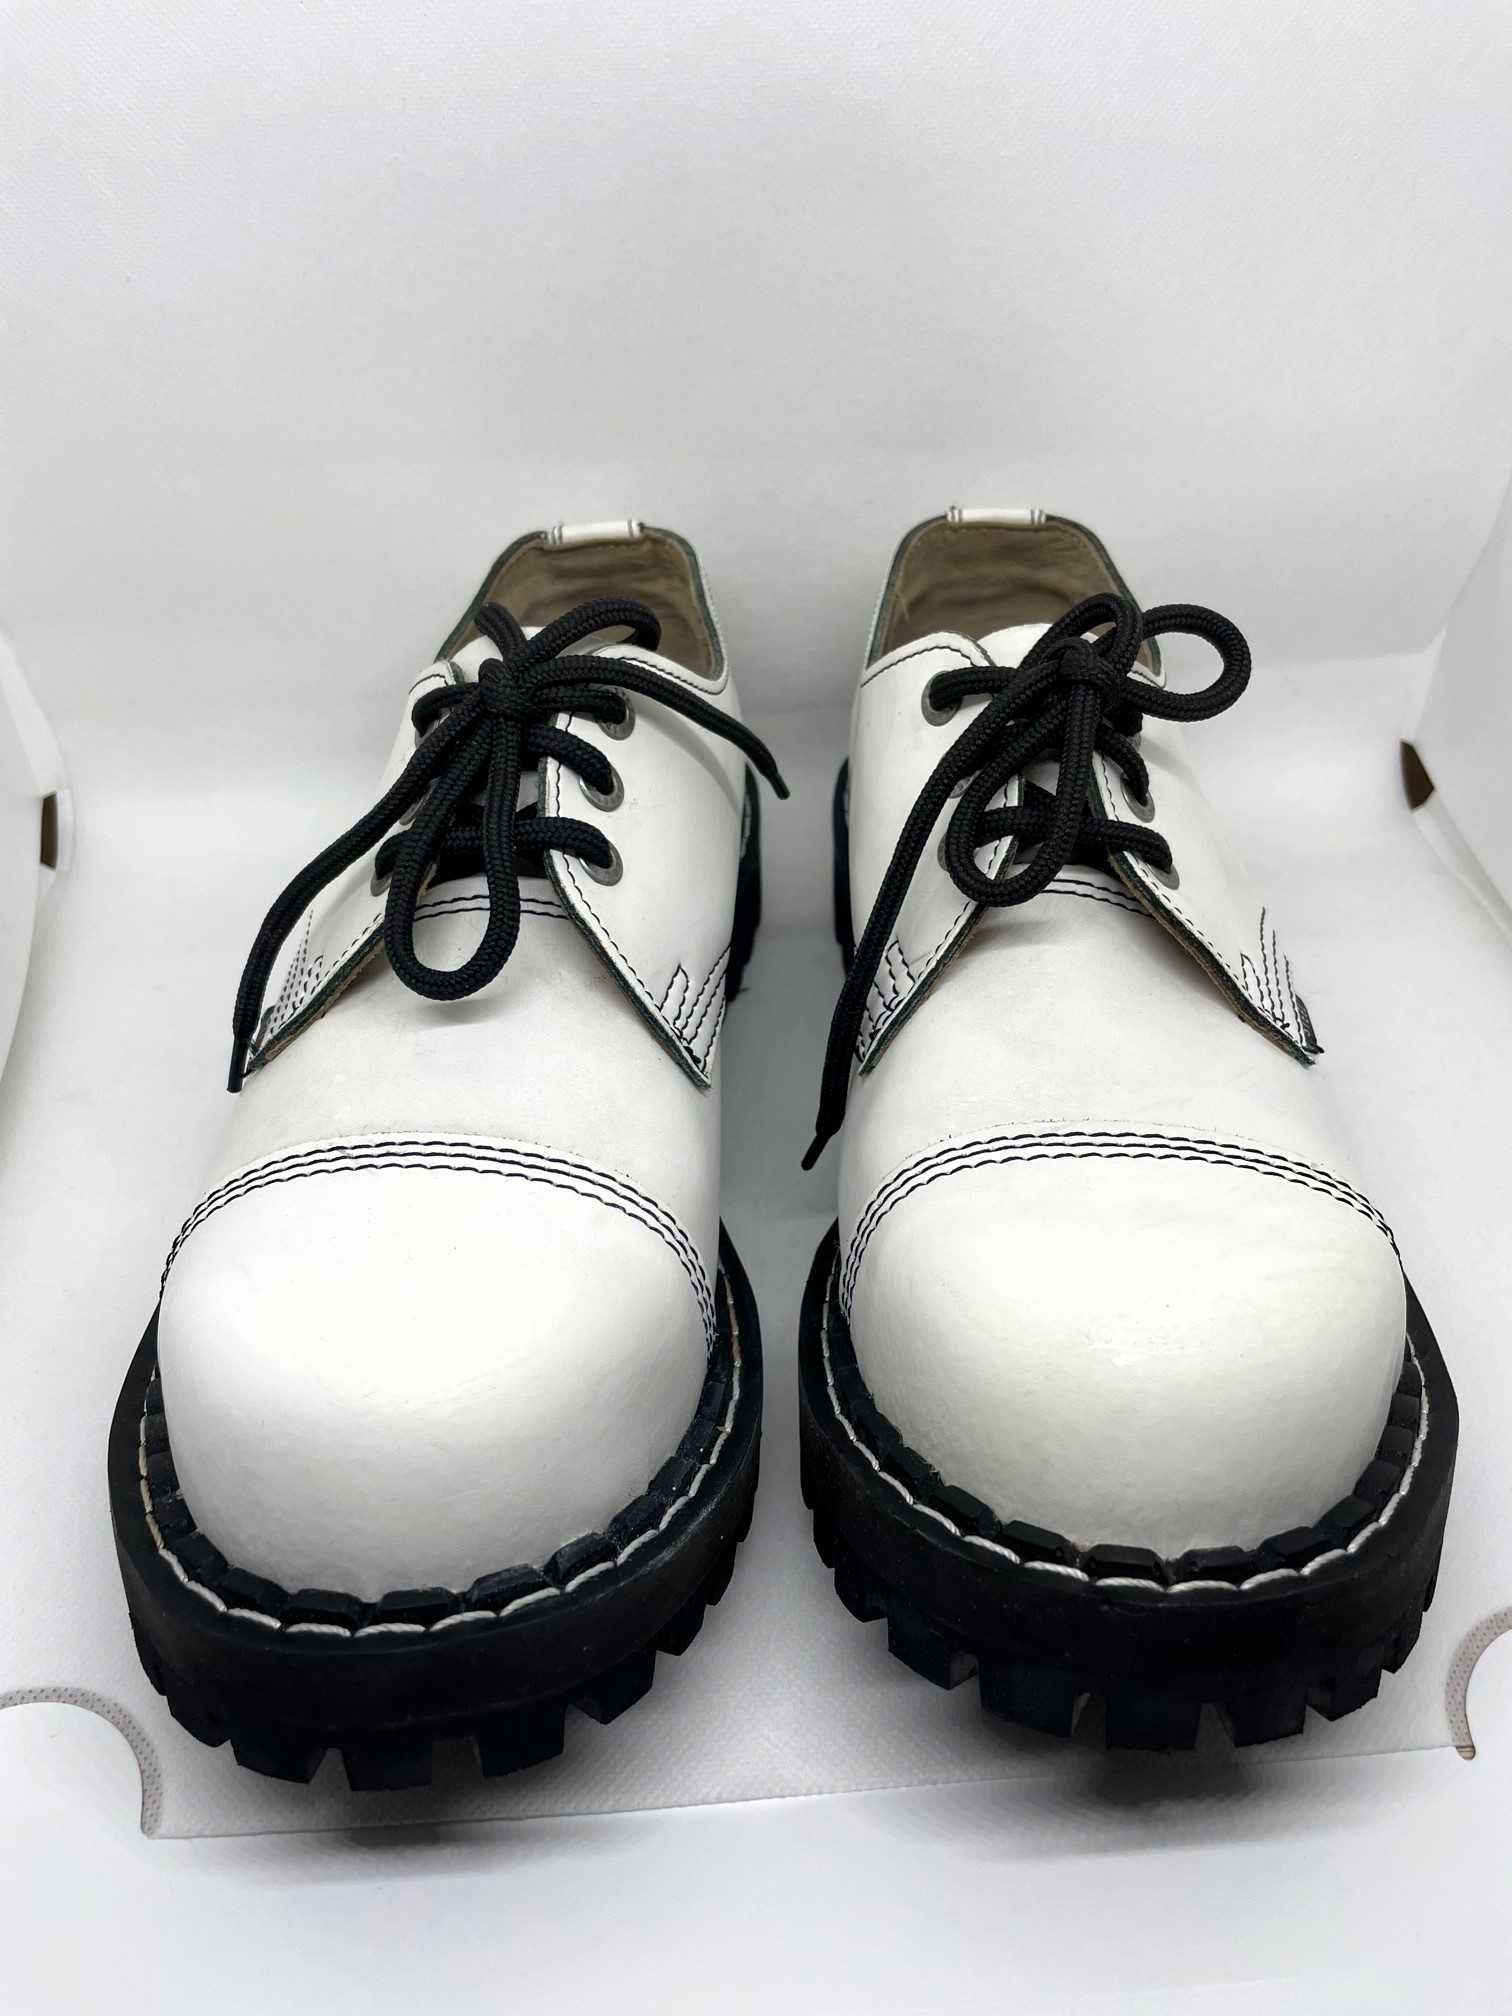 Buty glany STEEL Unisex białe 3-dziurkowe jak nowe r. 41, 26 cm